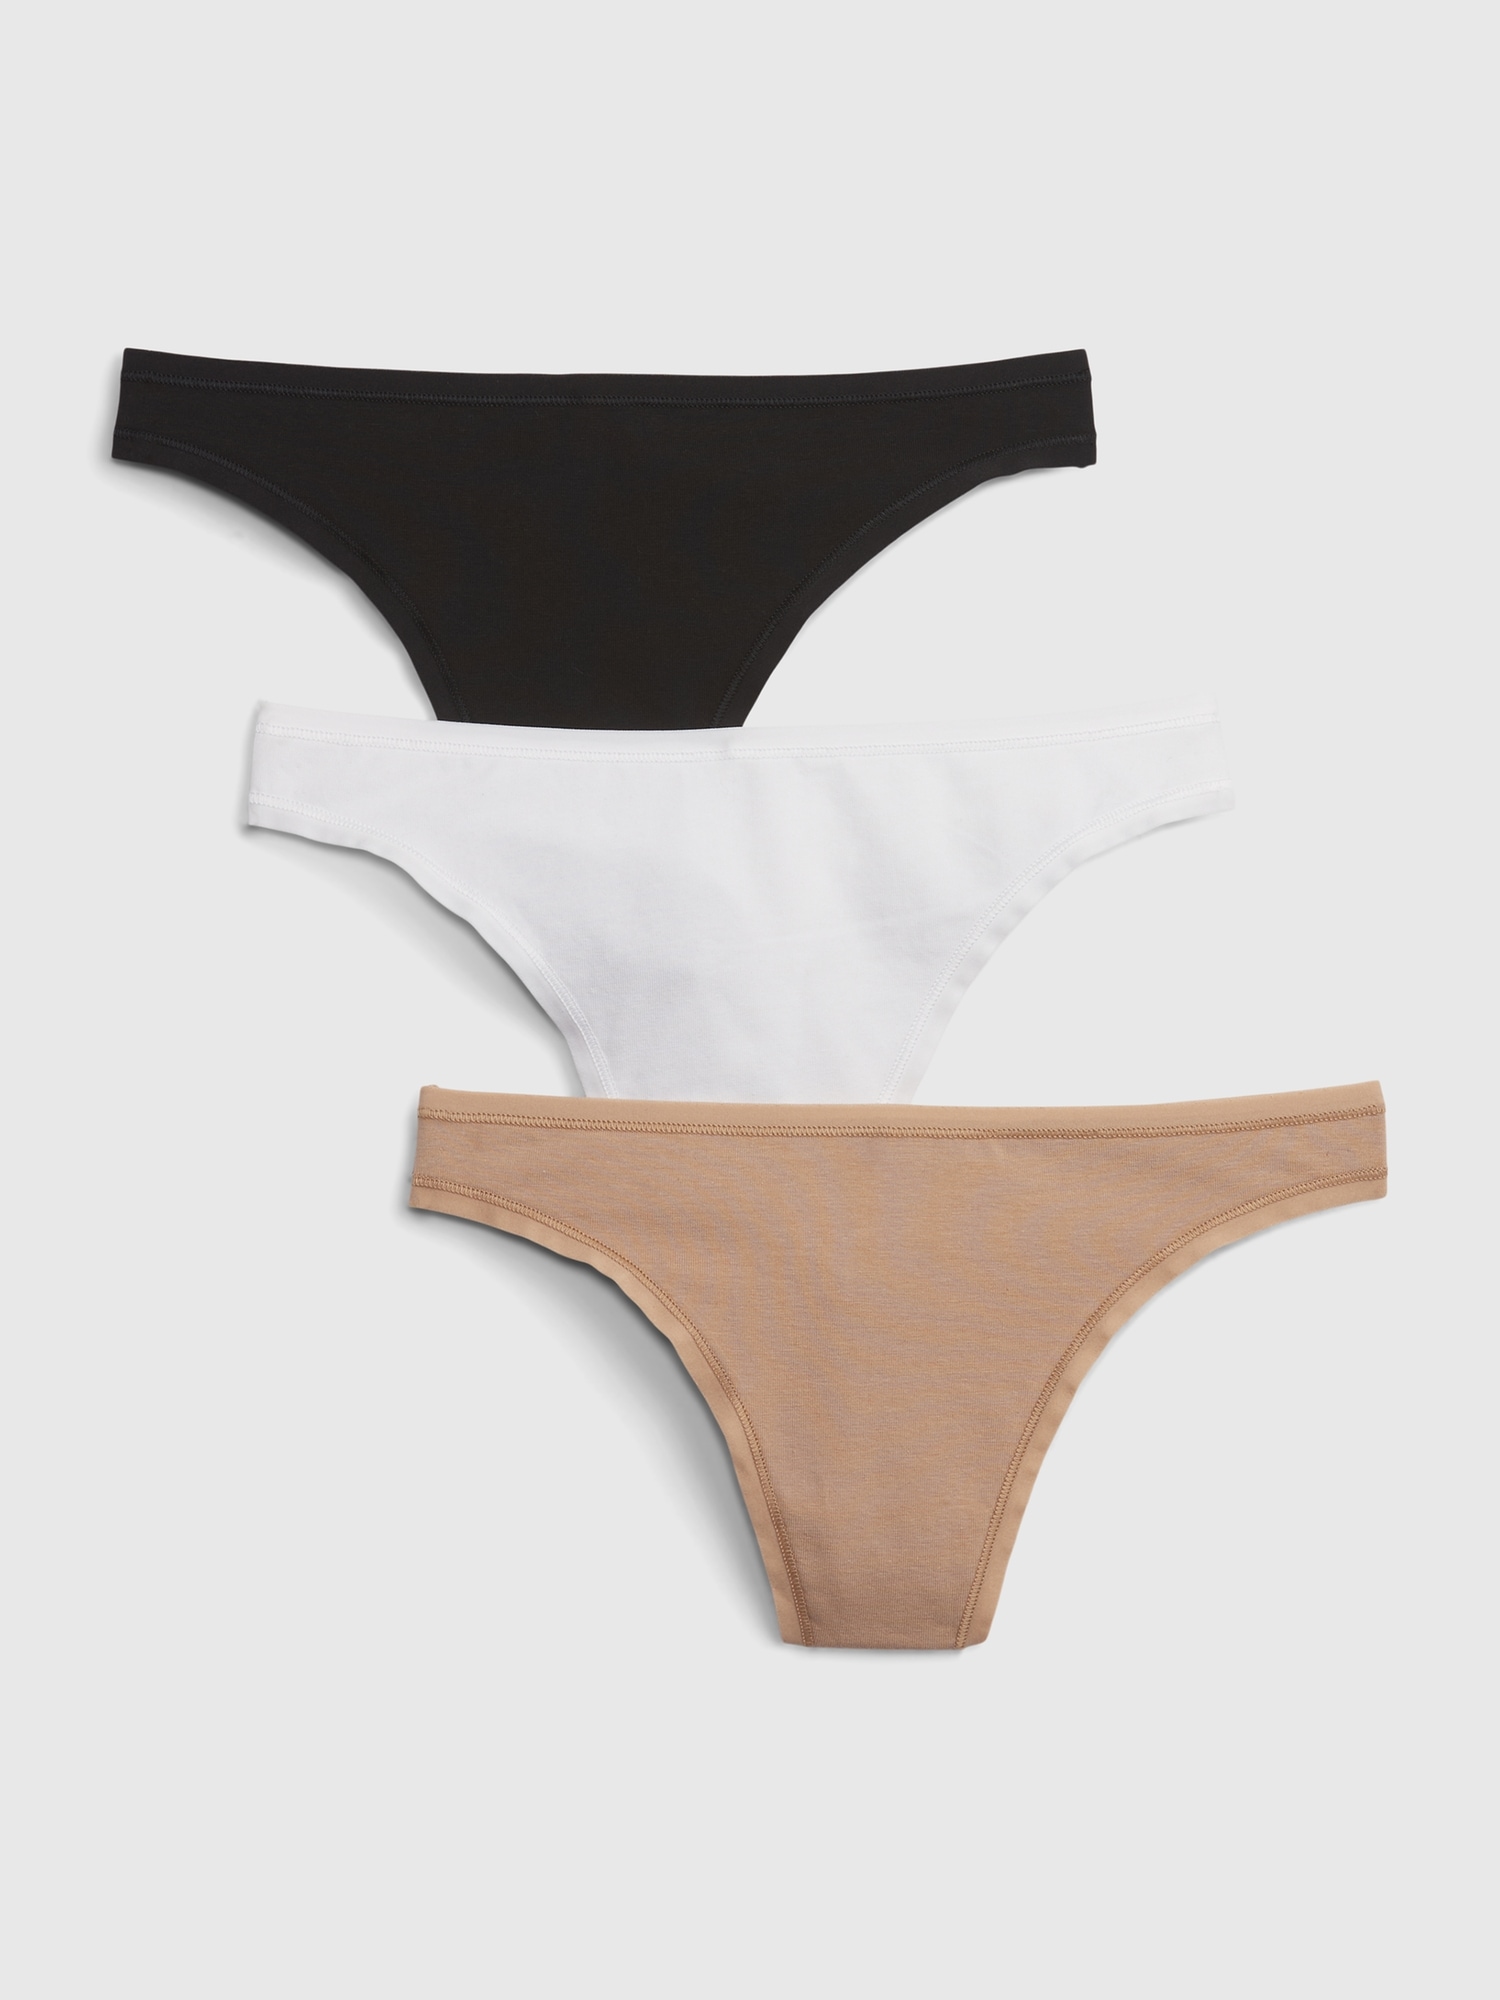 Buy Women's Modern Cotton Stretch Thong Panties Online at